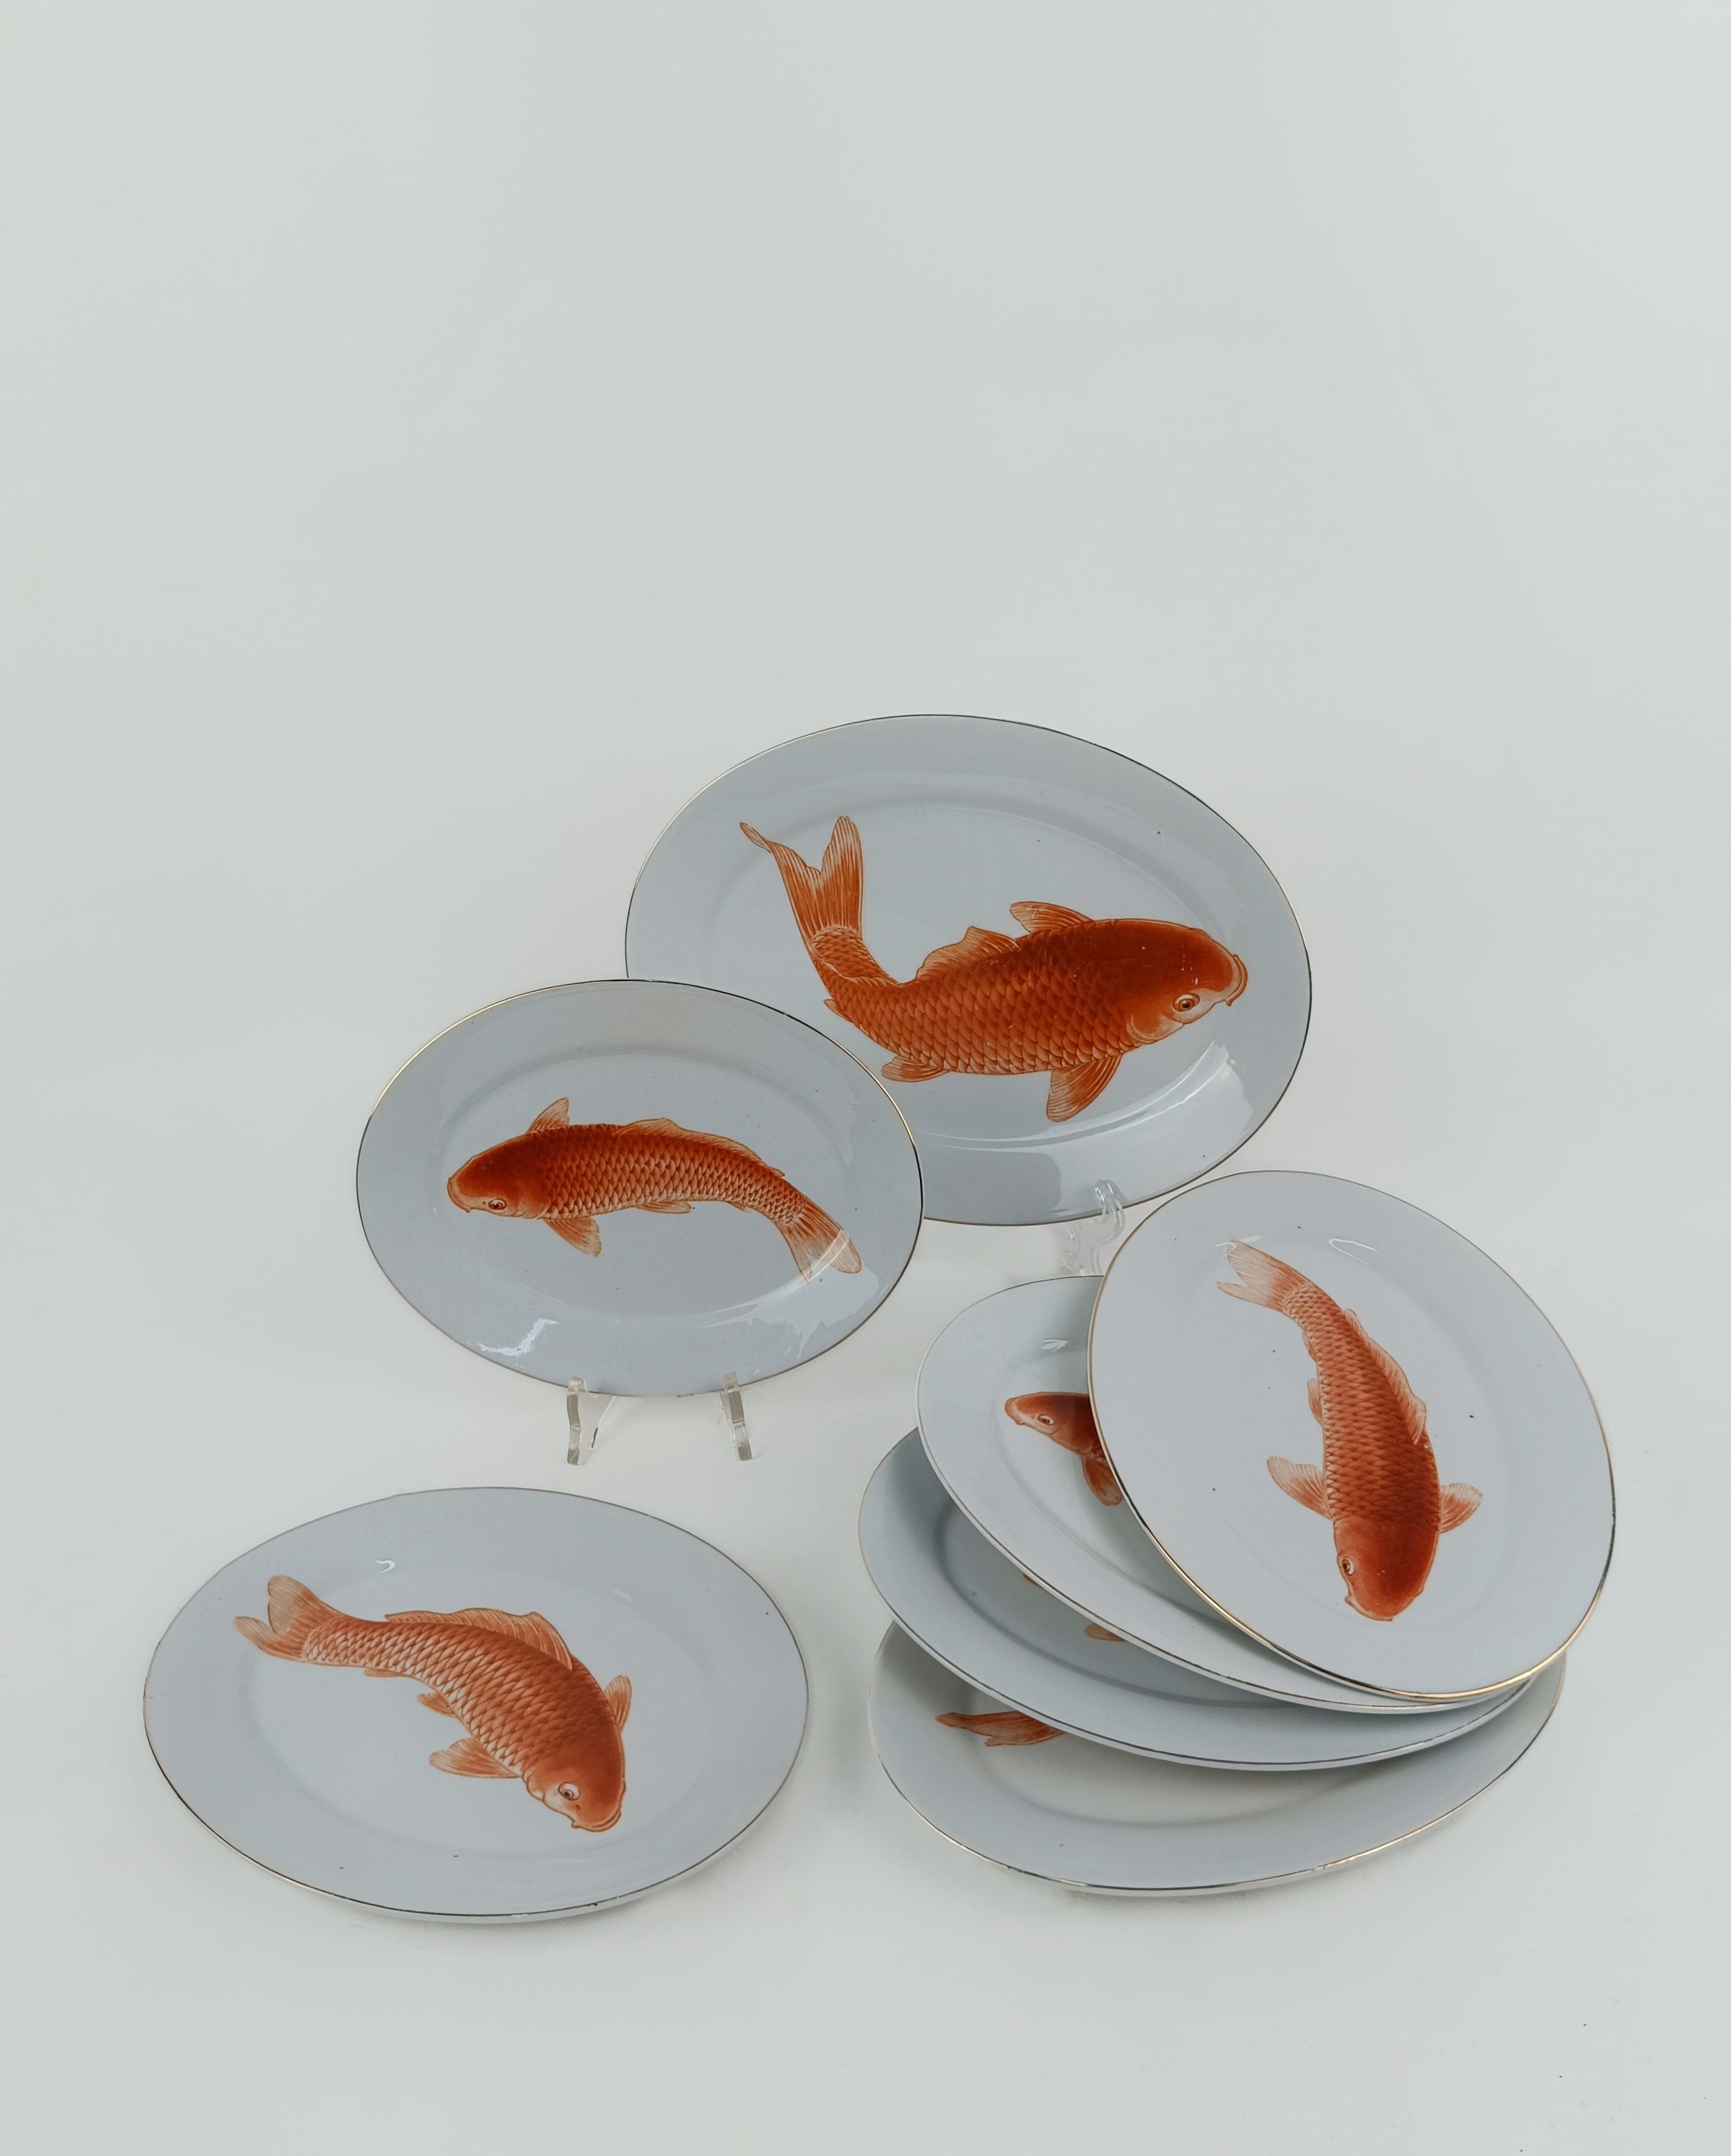 Set of Vintage Fish Service Plates in Bavarian Porcelain with Japanese decor